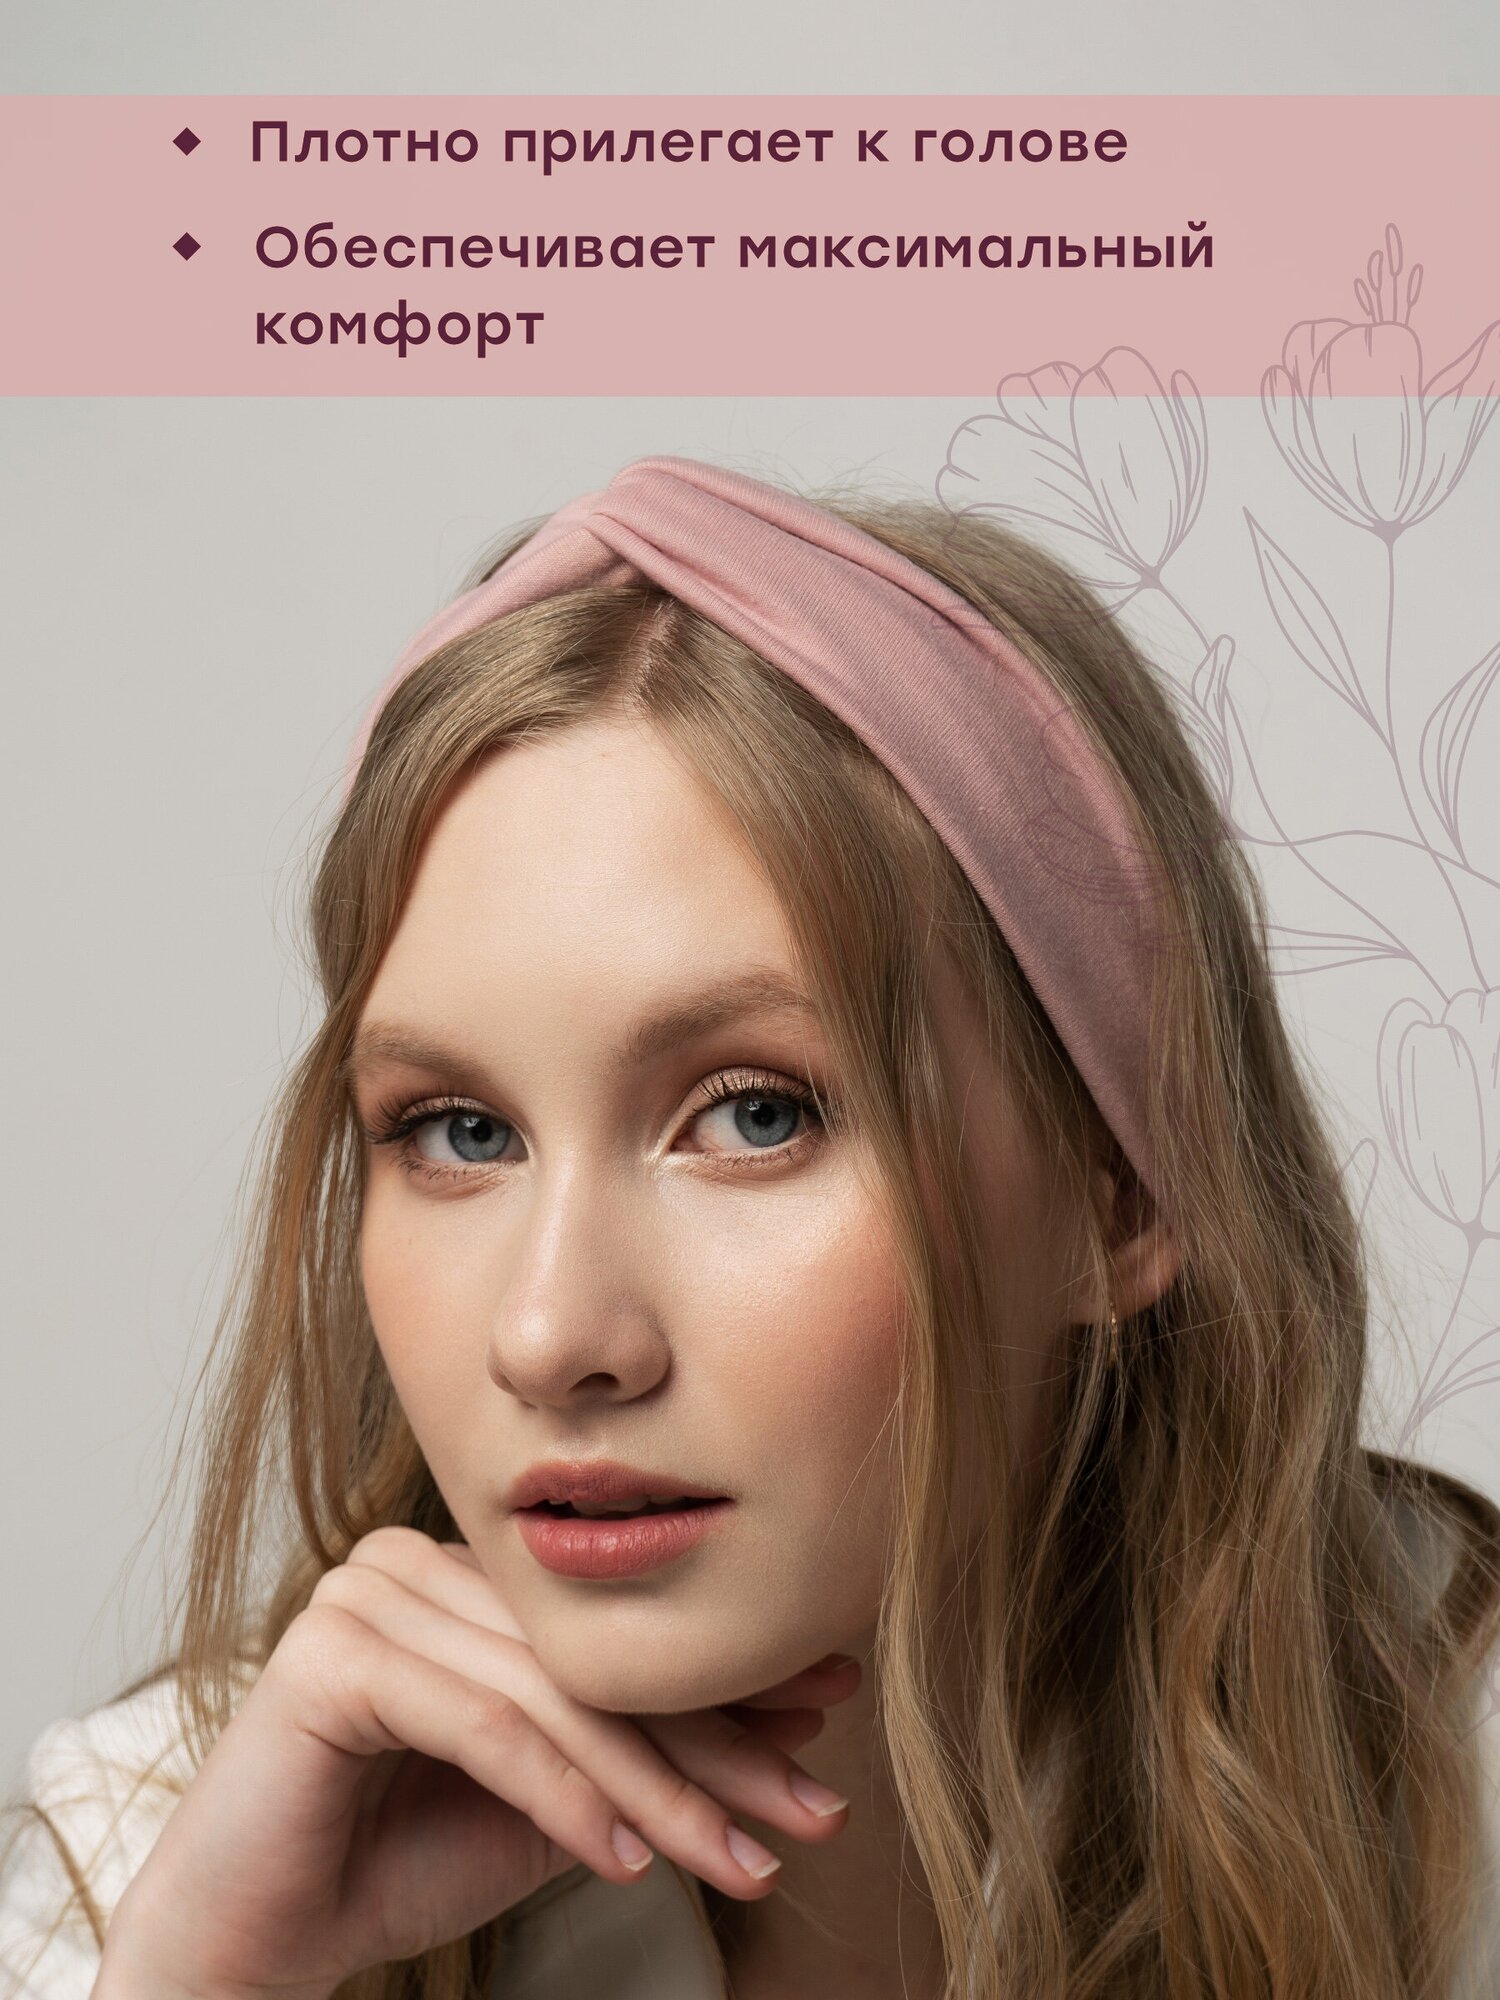 Повязка на голову женская, JewelryMeverly, Мягкая повязка для головы / Повязка на уши для девочки / Летняя повязка на голову женская, Розовый